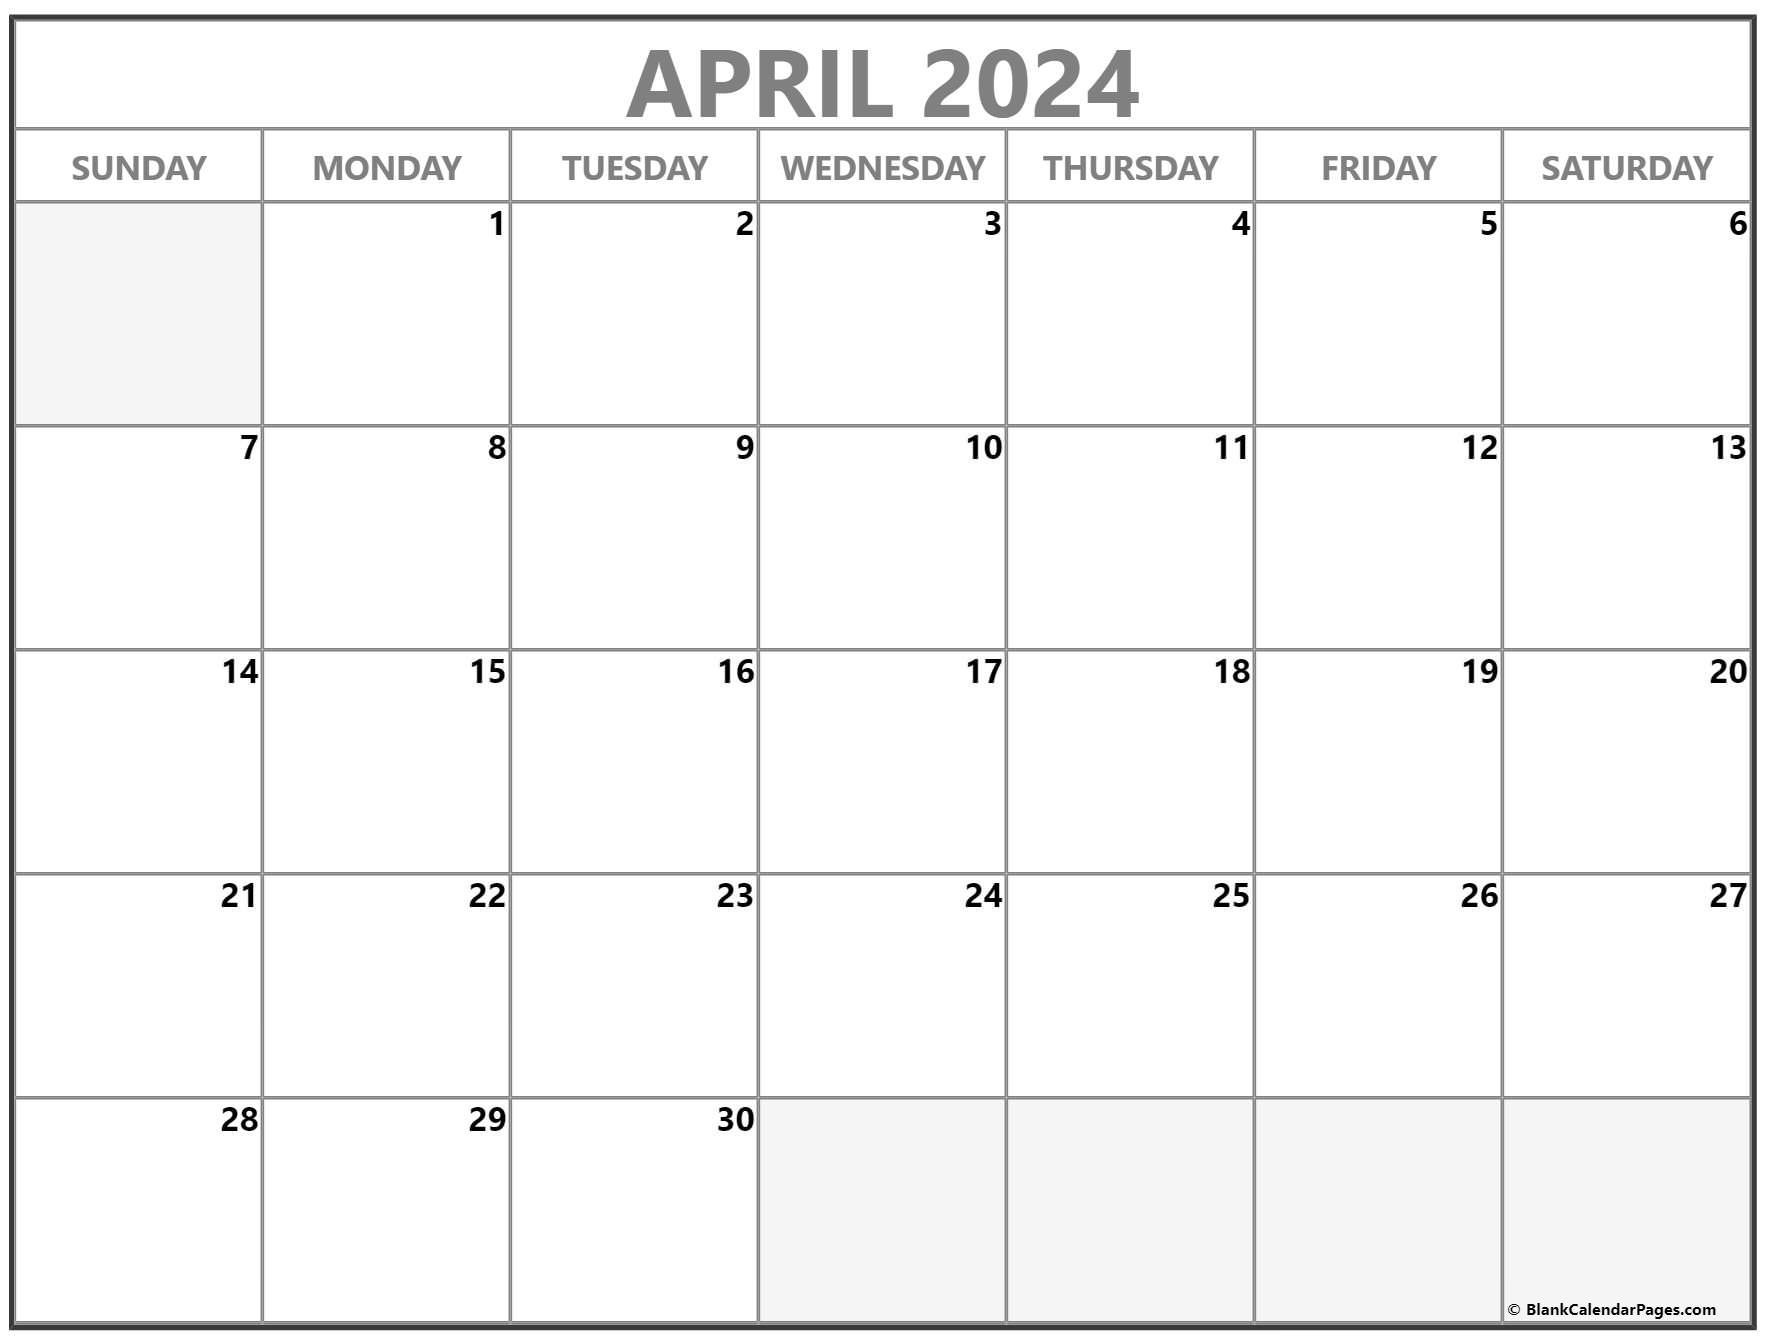 april-2023-calendar-free-printable-calendar-download-printable-april-2023-calendars-2023